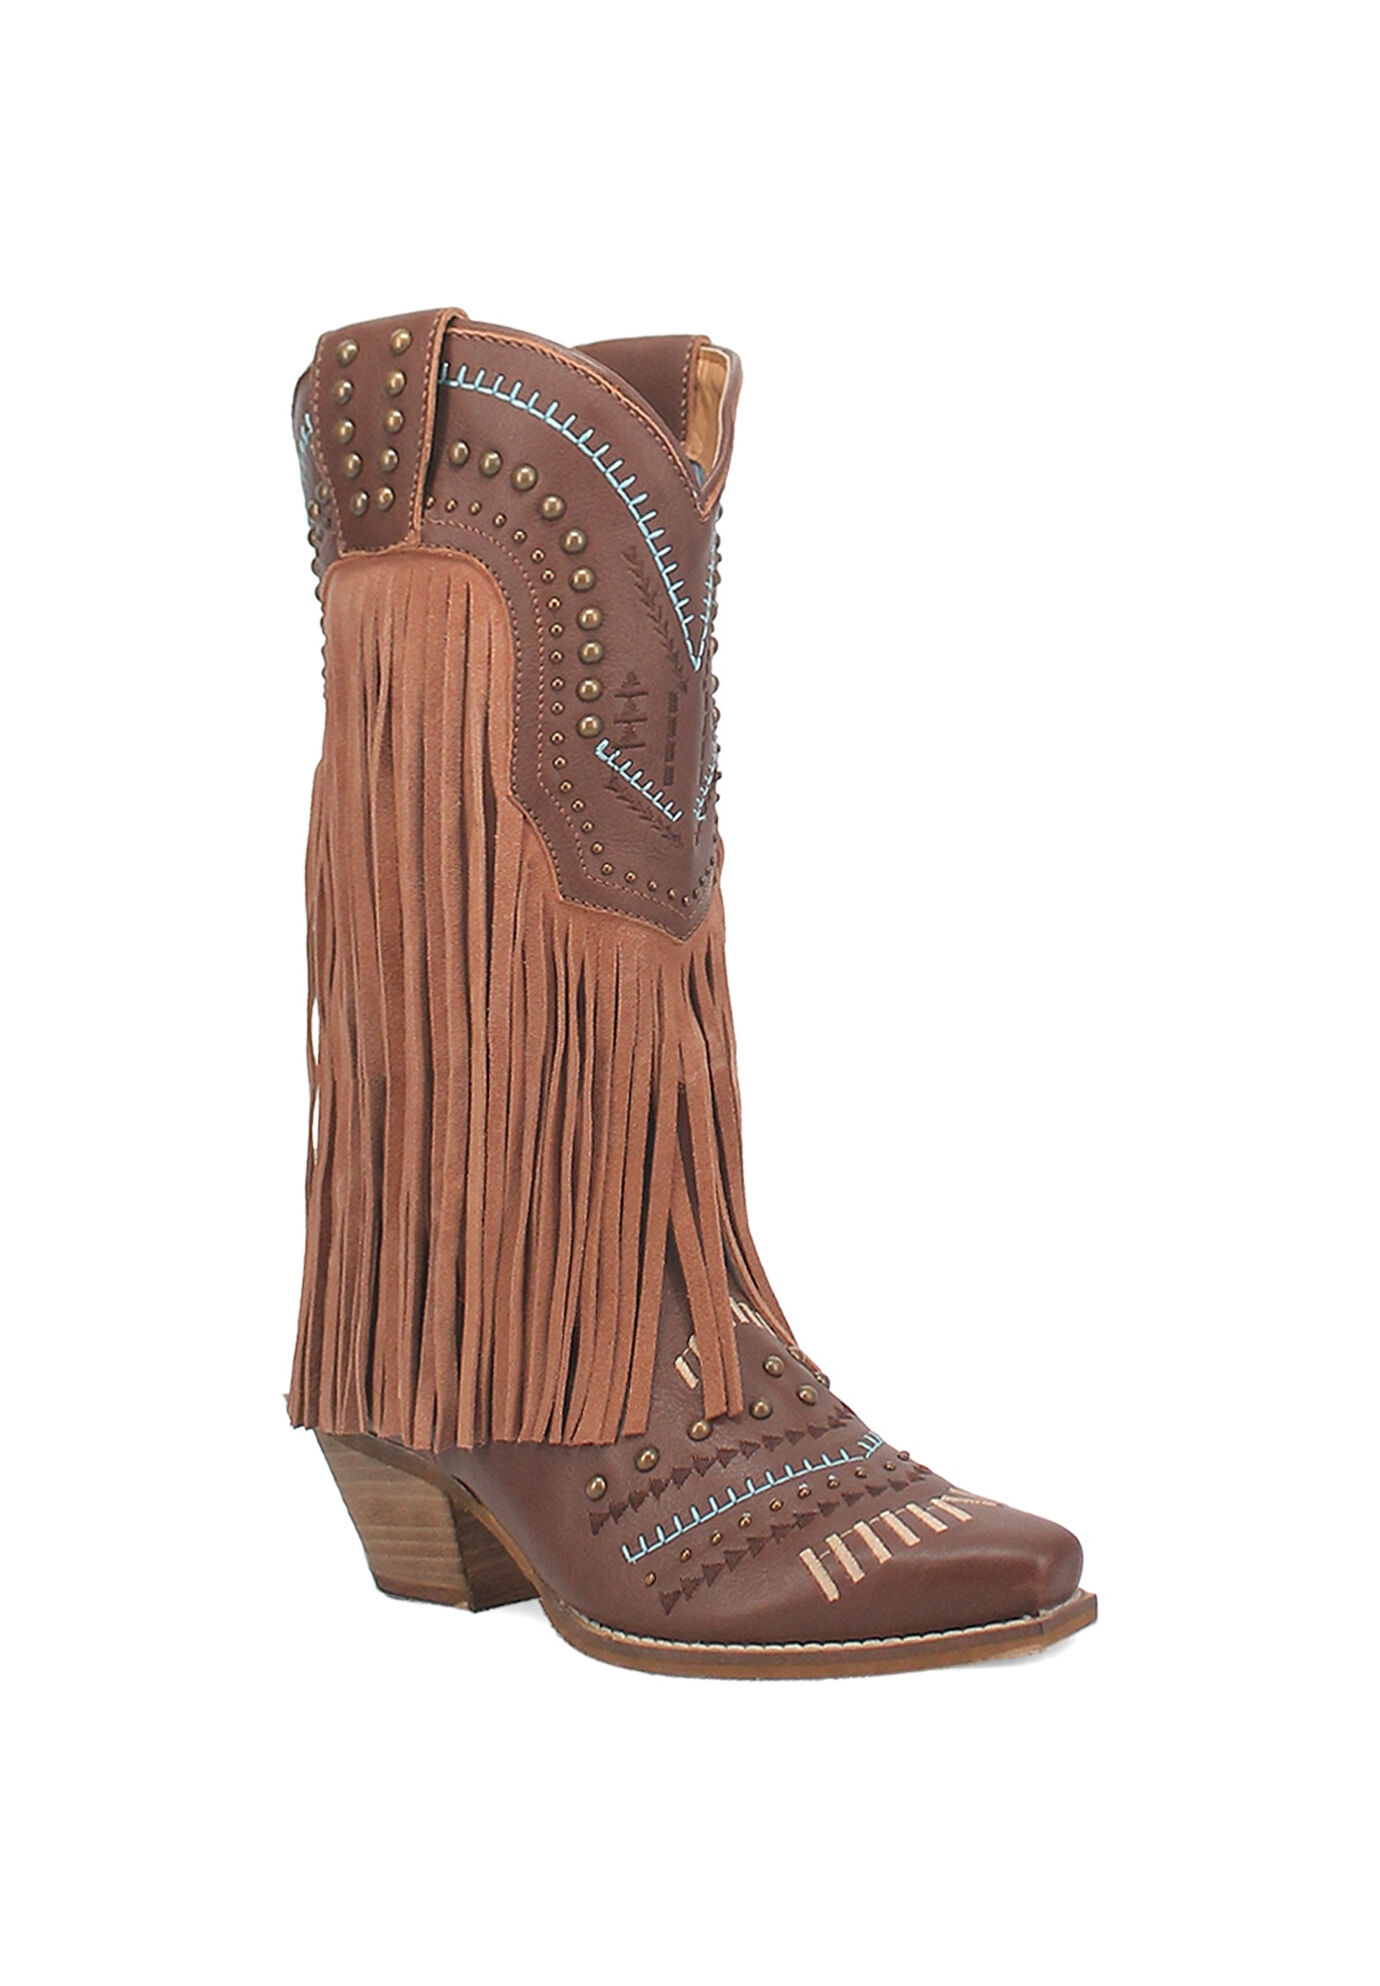 Women's Gypsy Western Fringe Boot by Dingo in Brown (Size 7 1/2 M)